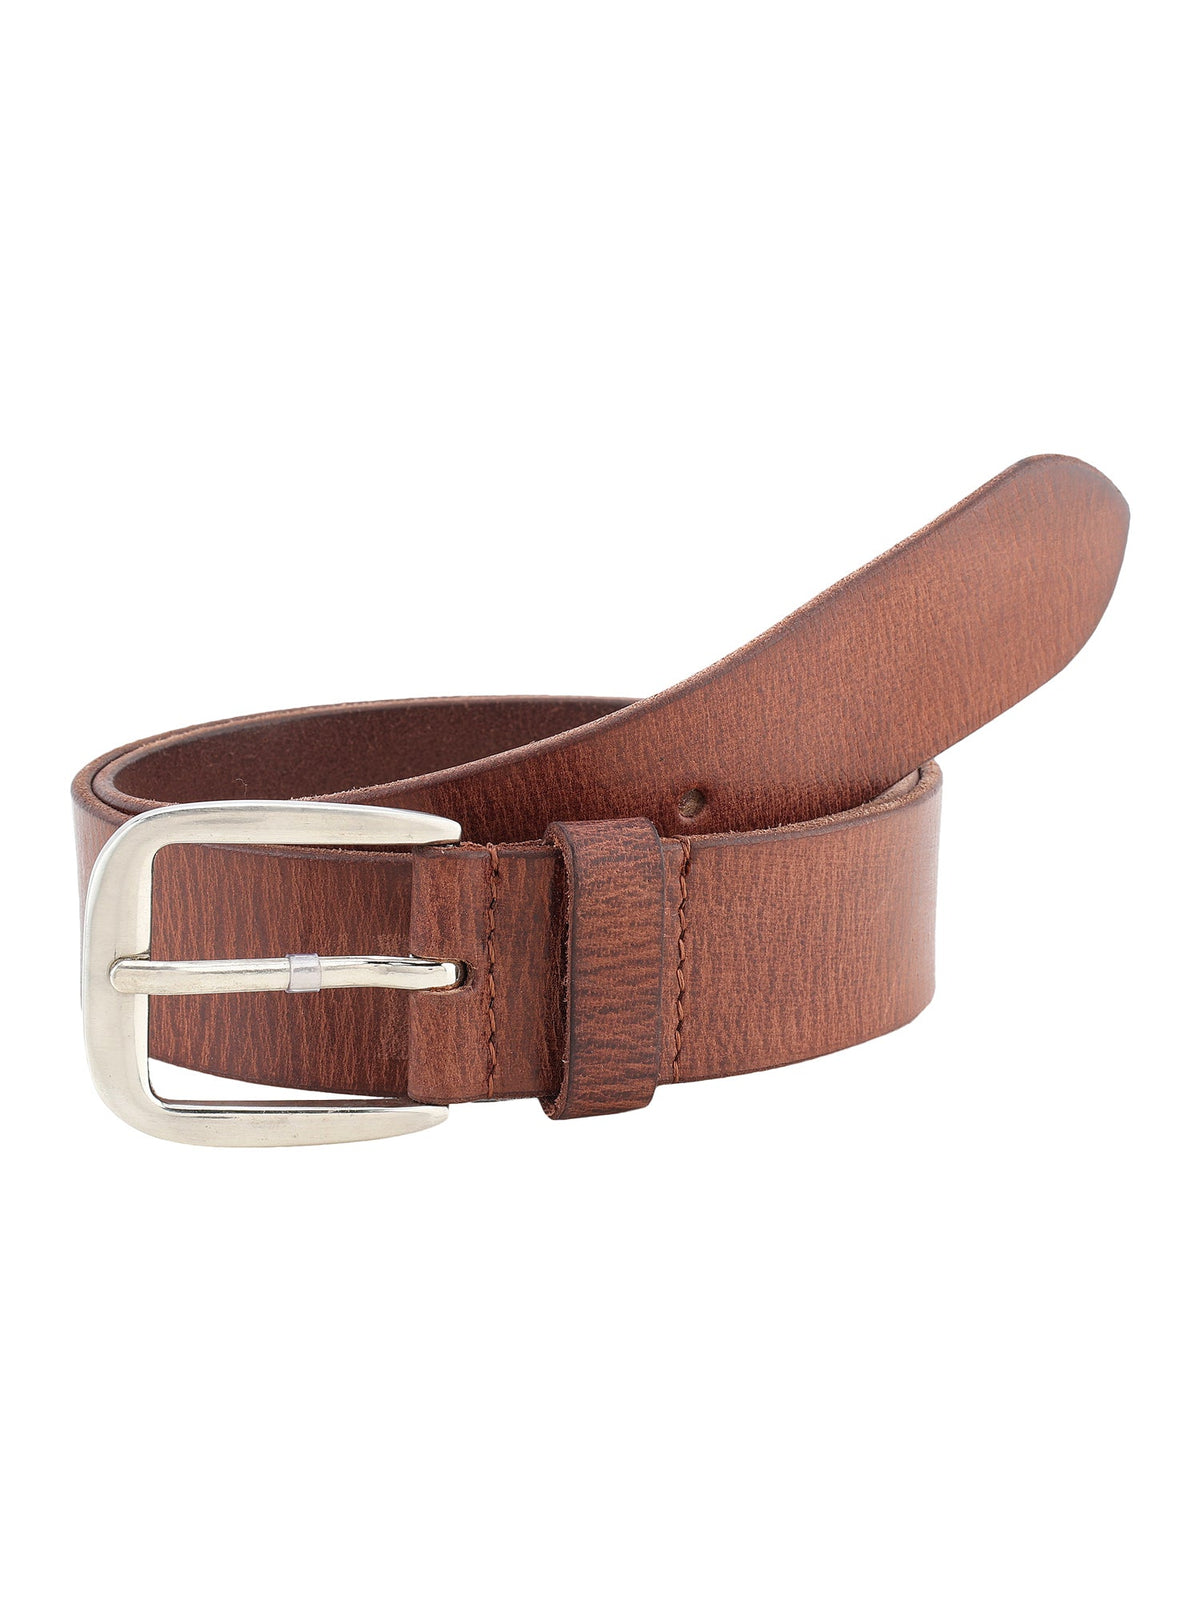 Genuine Leather Men's Casual Brown Belt